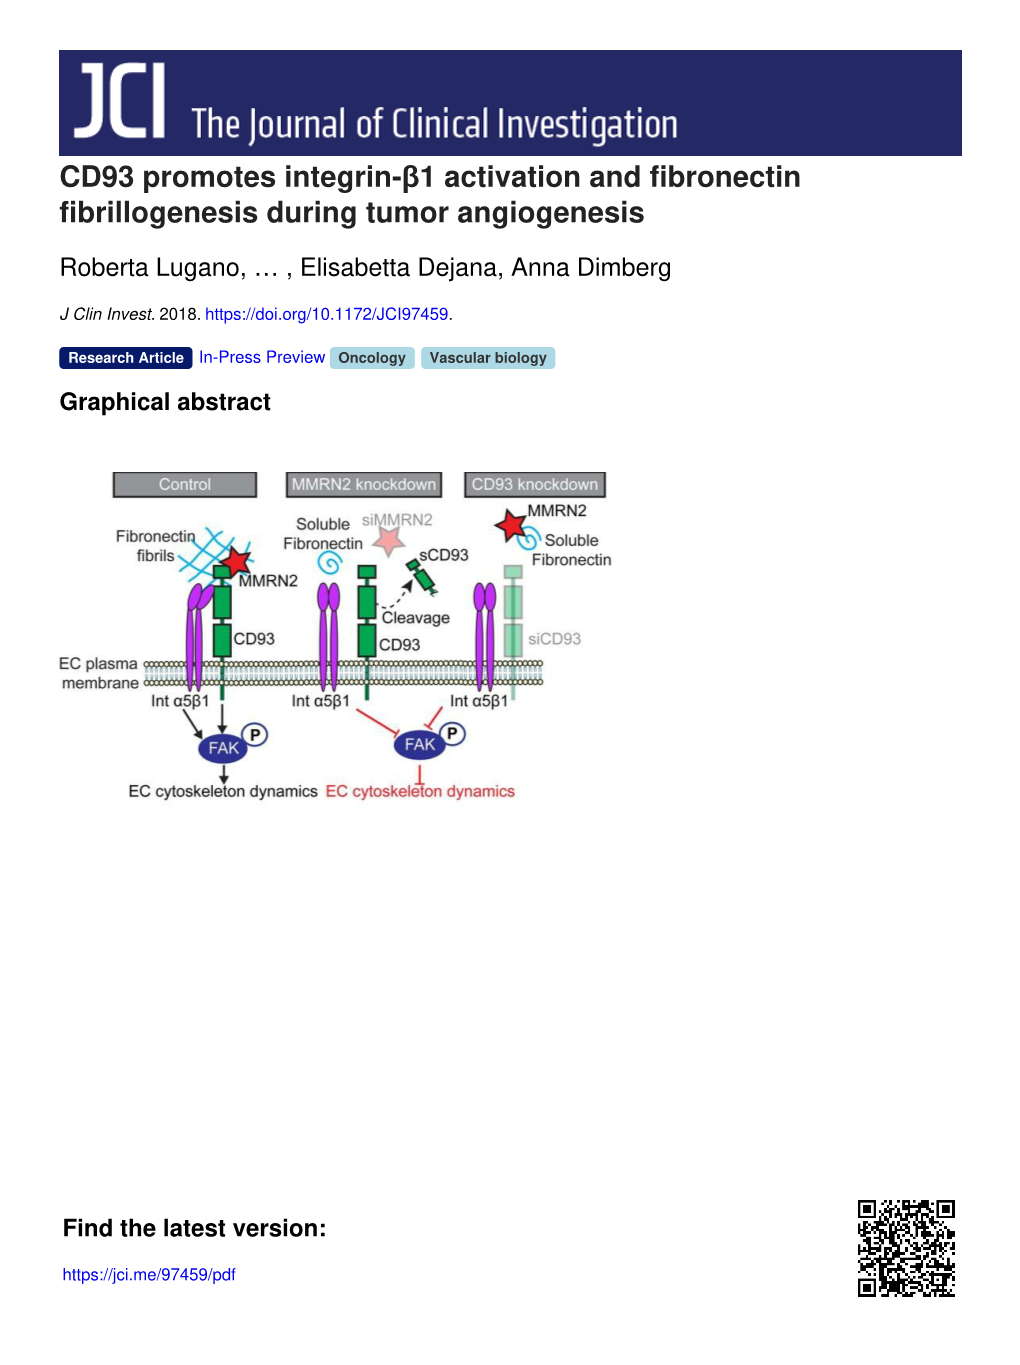 CD93 Promotes Integrin-Β1 Activation and Fibronectin Fibrillogenesis During Tumor Angiogenesis